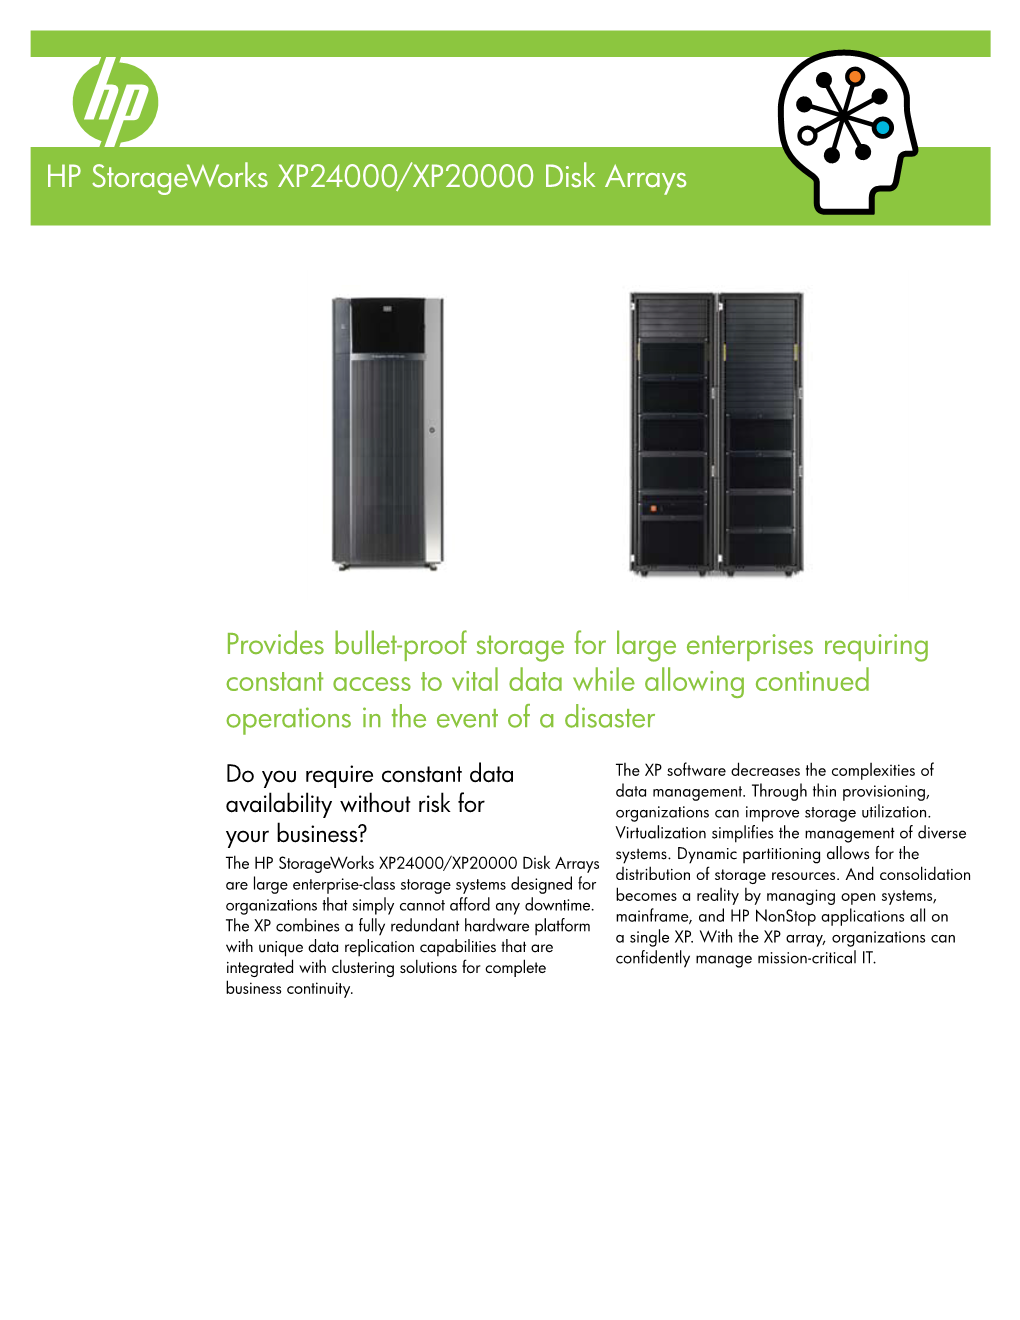 HP Storageworks XP24000 Disk Array HP Storageworks XP20000 Disk Array